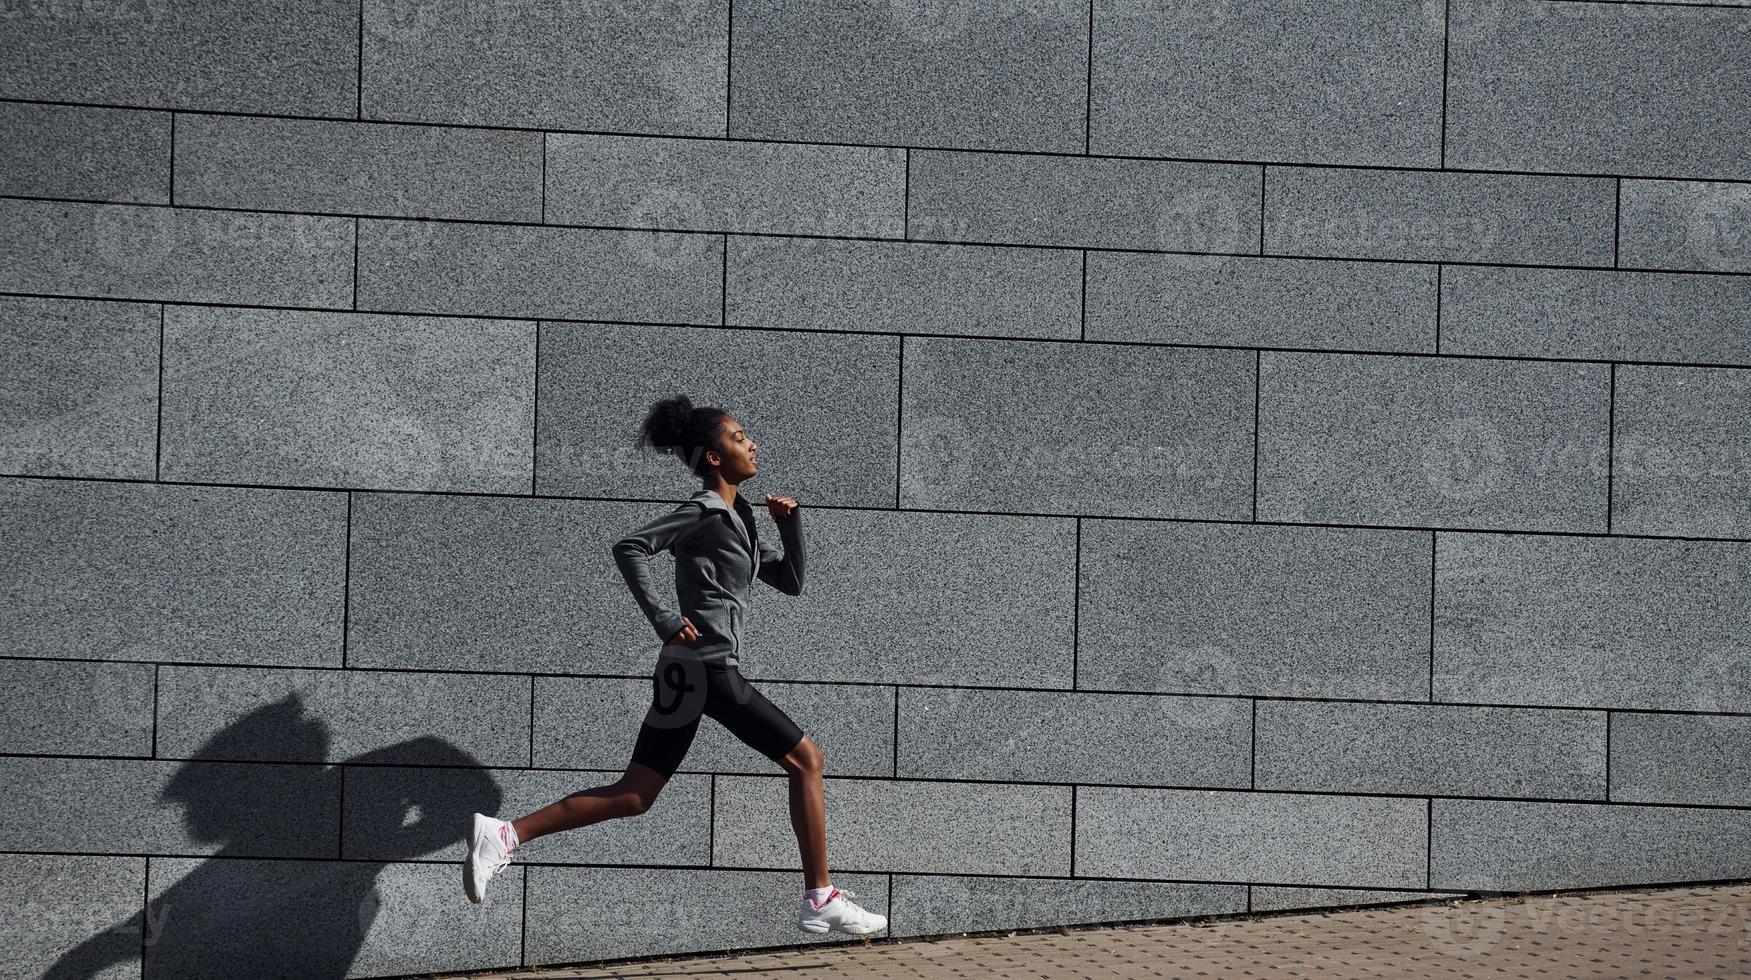 vista lateral de una joven afroamericana con ropa deportiva que corre cerca de la pared foto